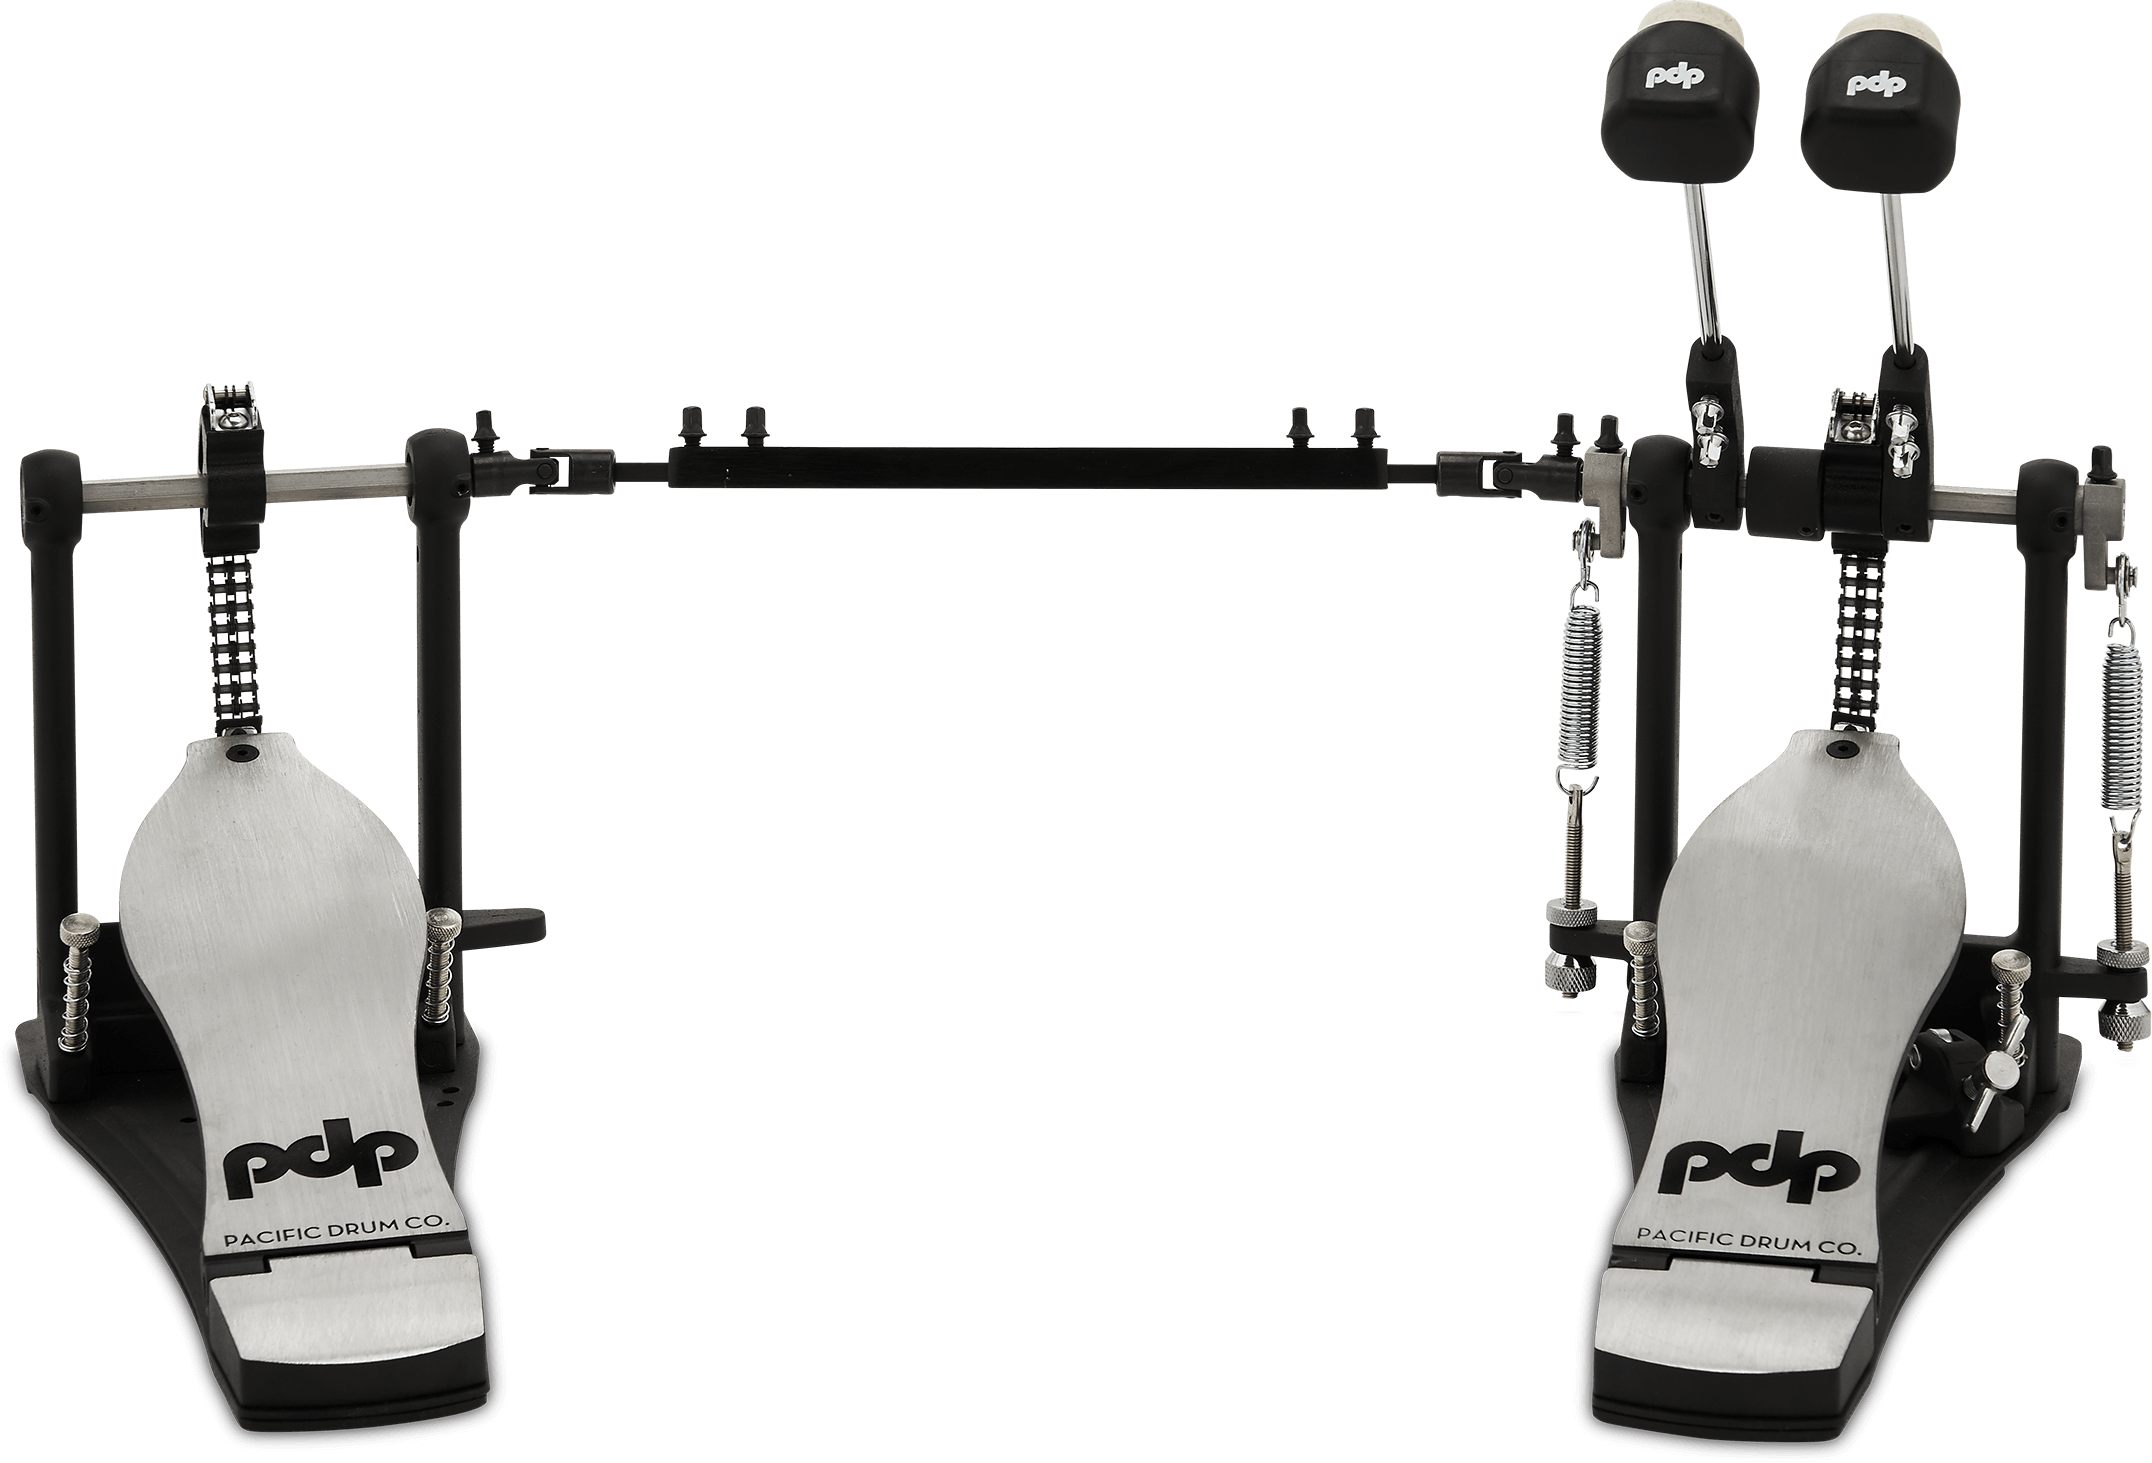 Pdp Pddp 812 Serie 800 Double Pedale - Pedal de bombo - Main picture